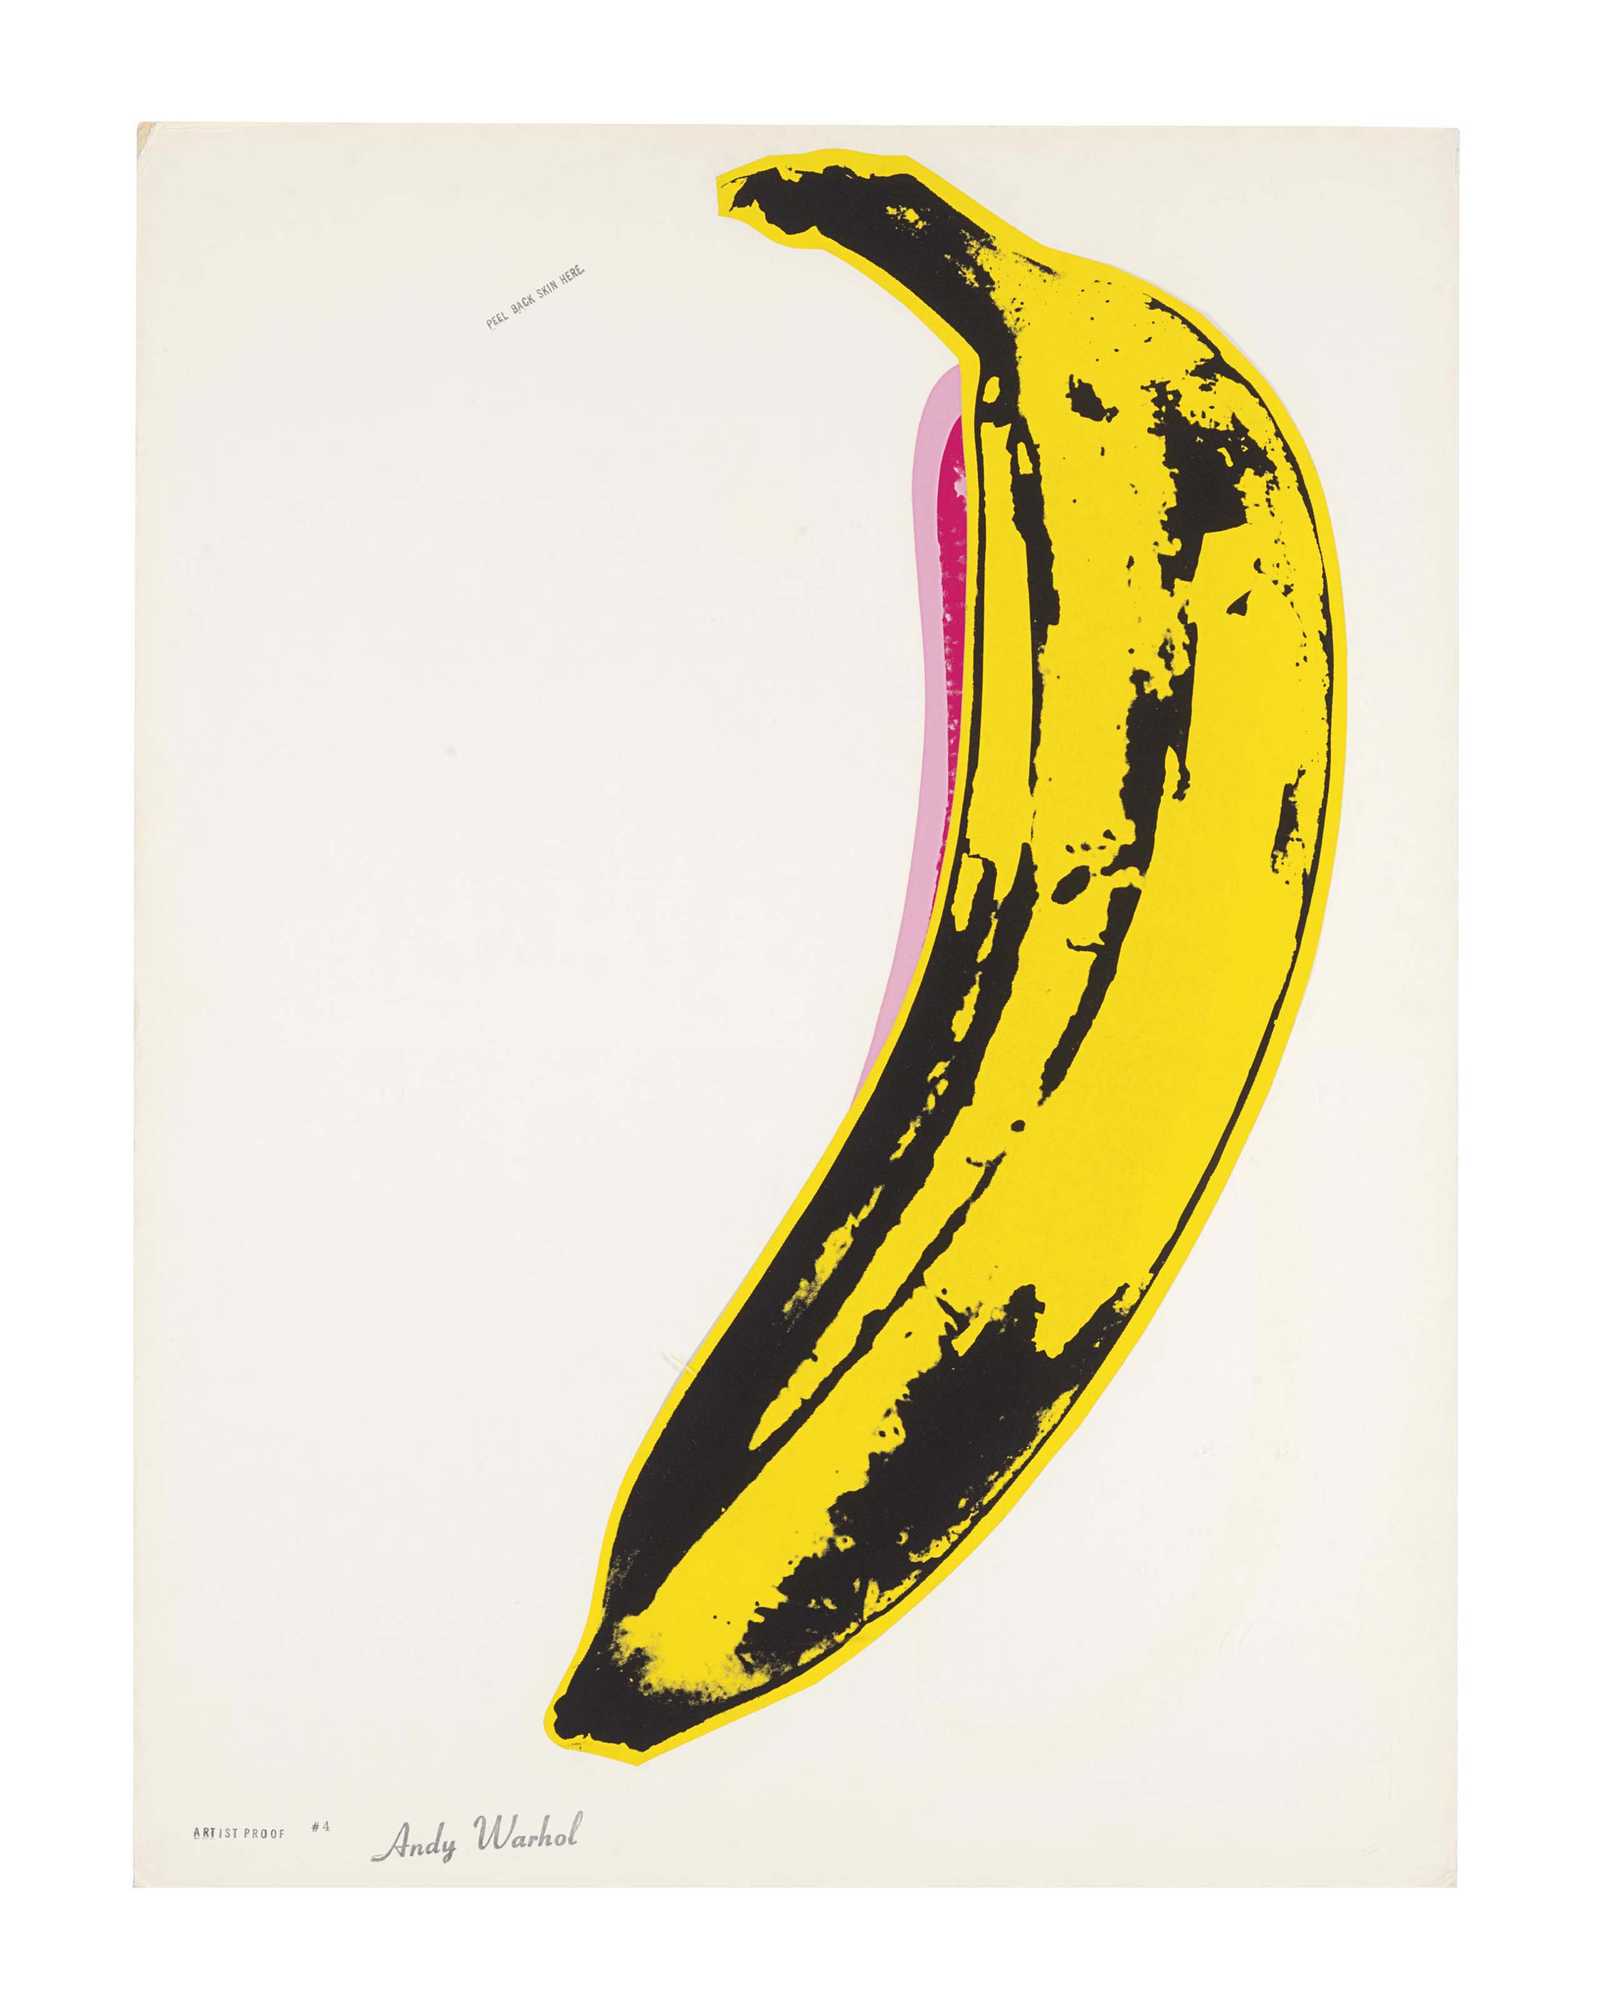 Artwork by Andy Warhol